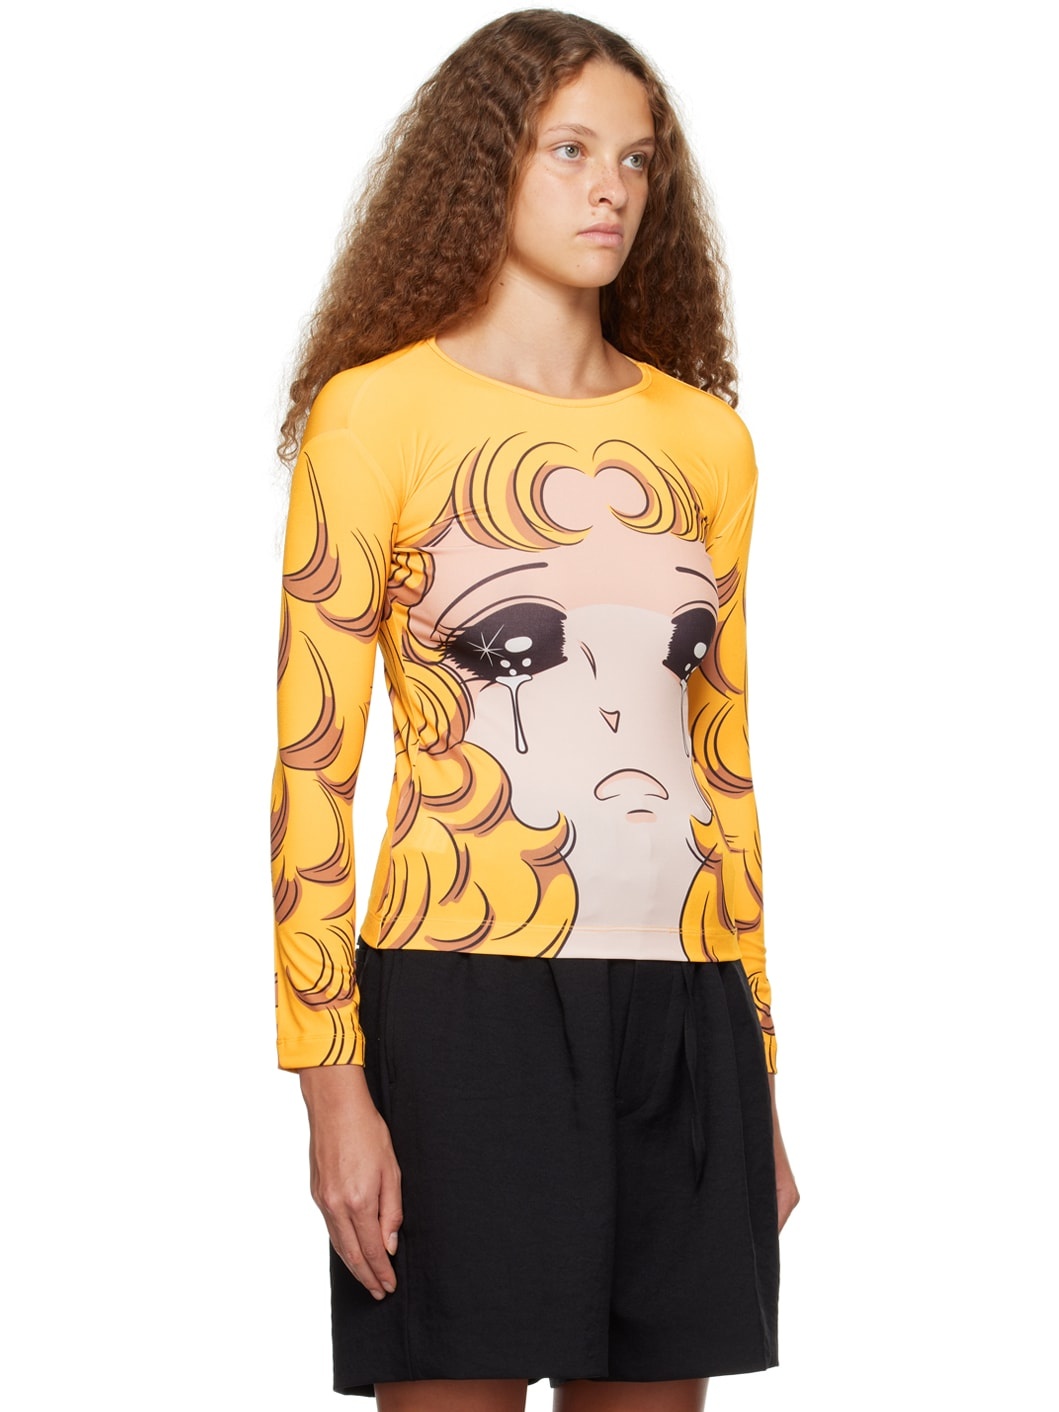 SSENSE Exclusive Yellow Crying Girl Long Sleeve T-Shirt - 2